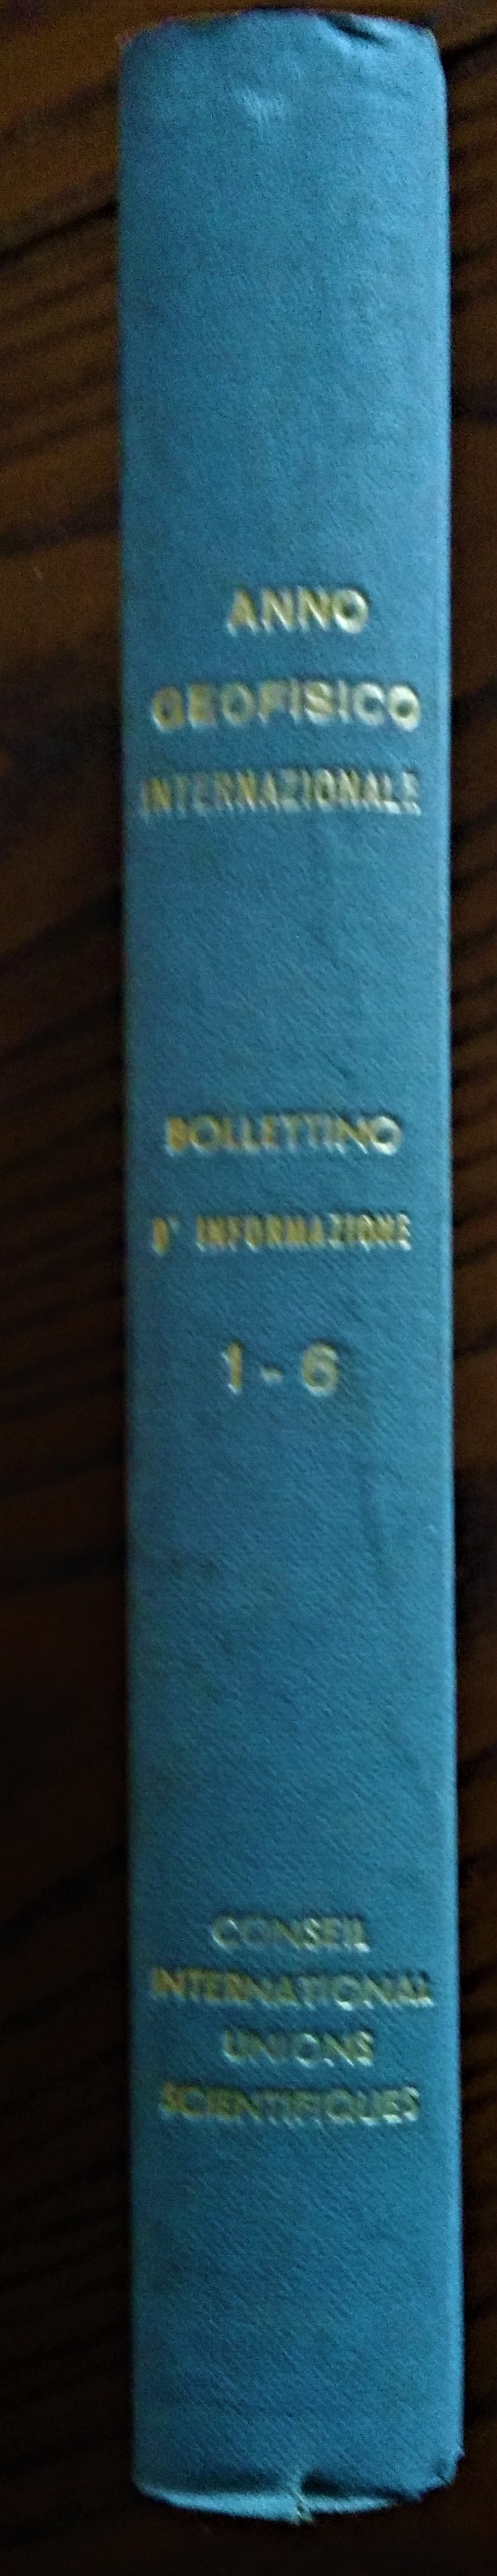 Annèe Gèophysique internationale 1957/1958 - International Geophysical Year. Bullettin d'information …